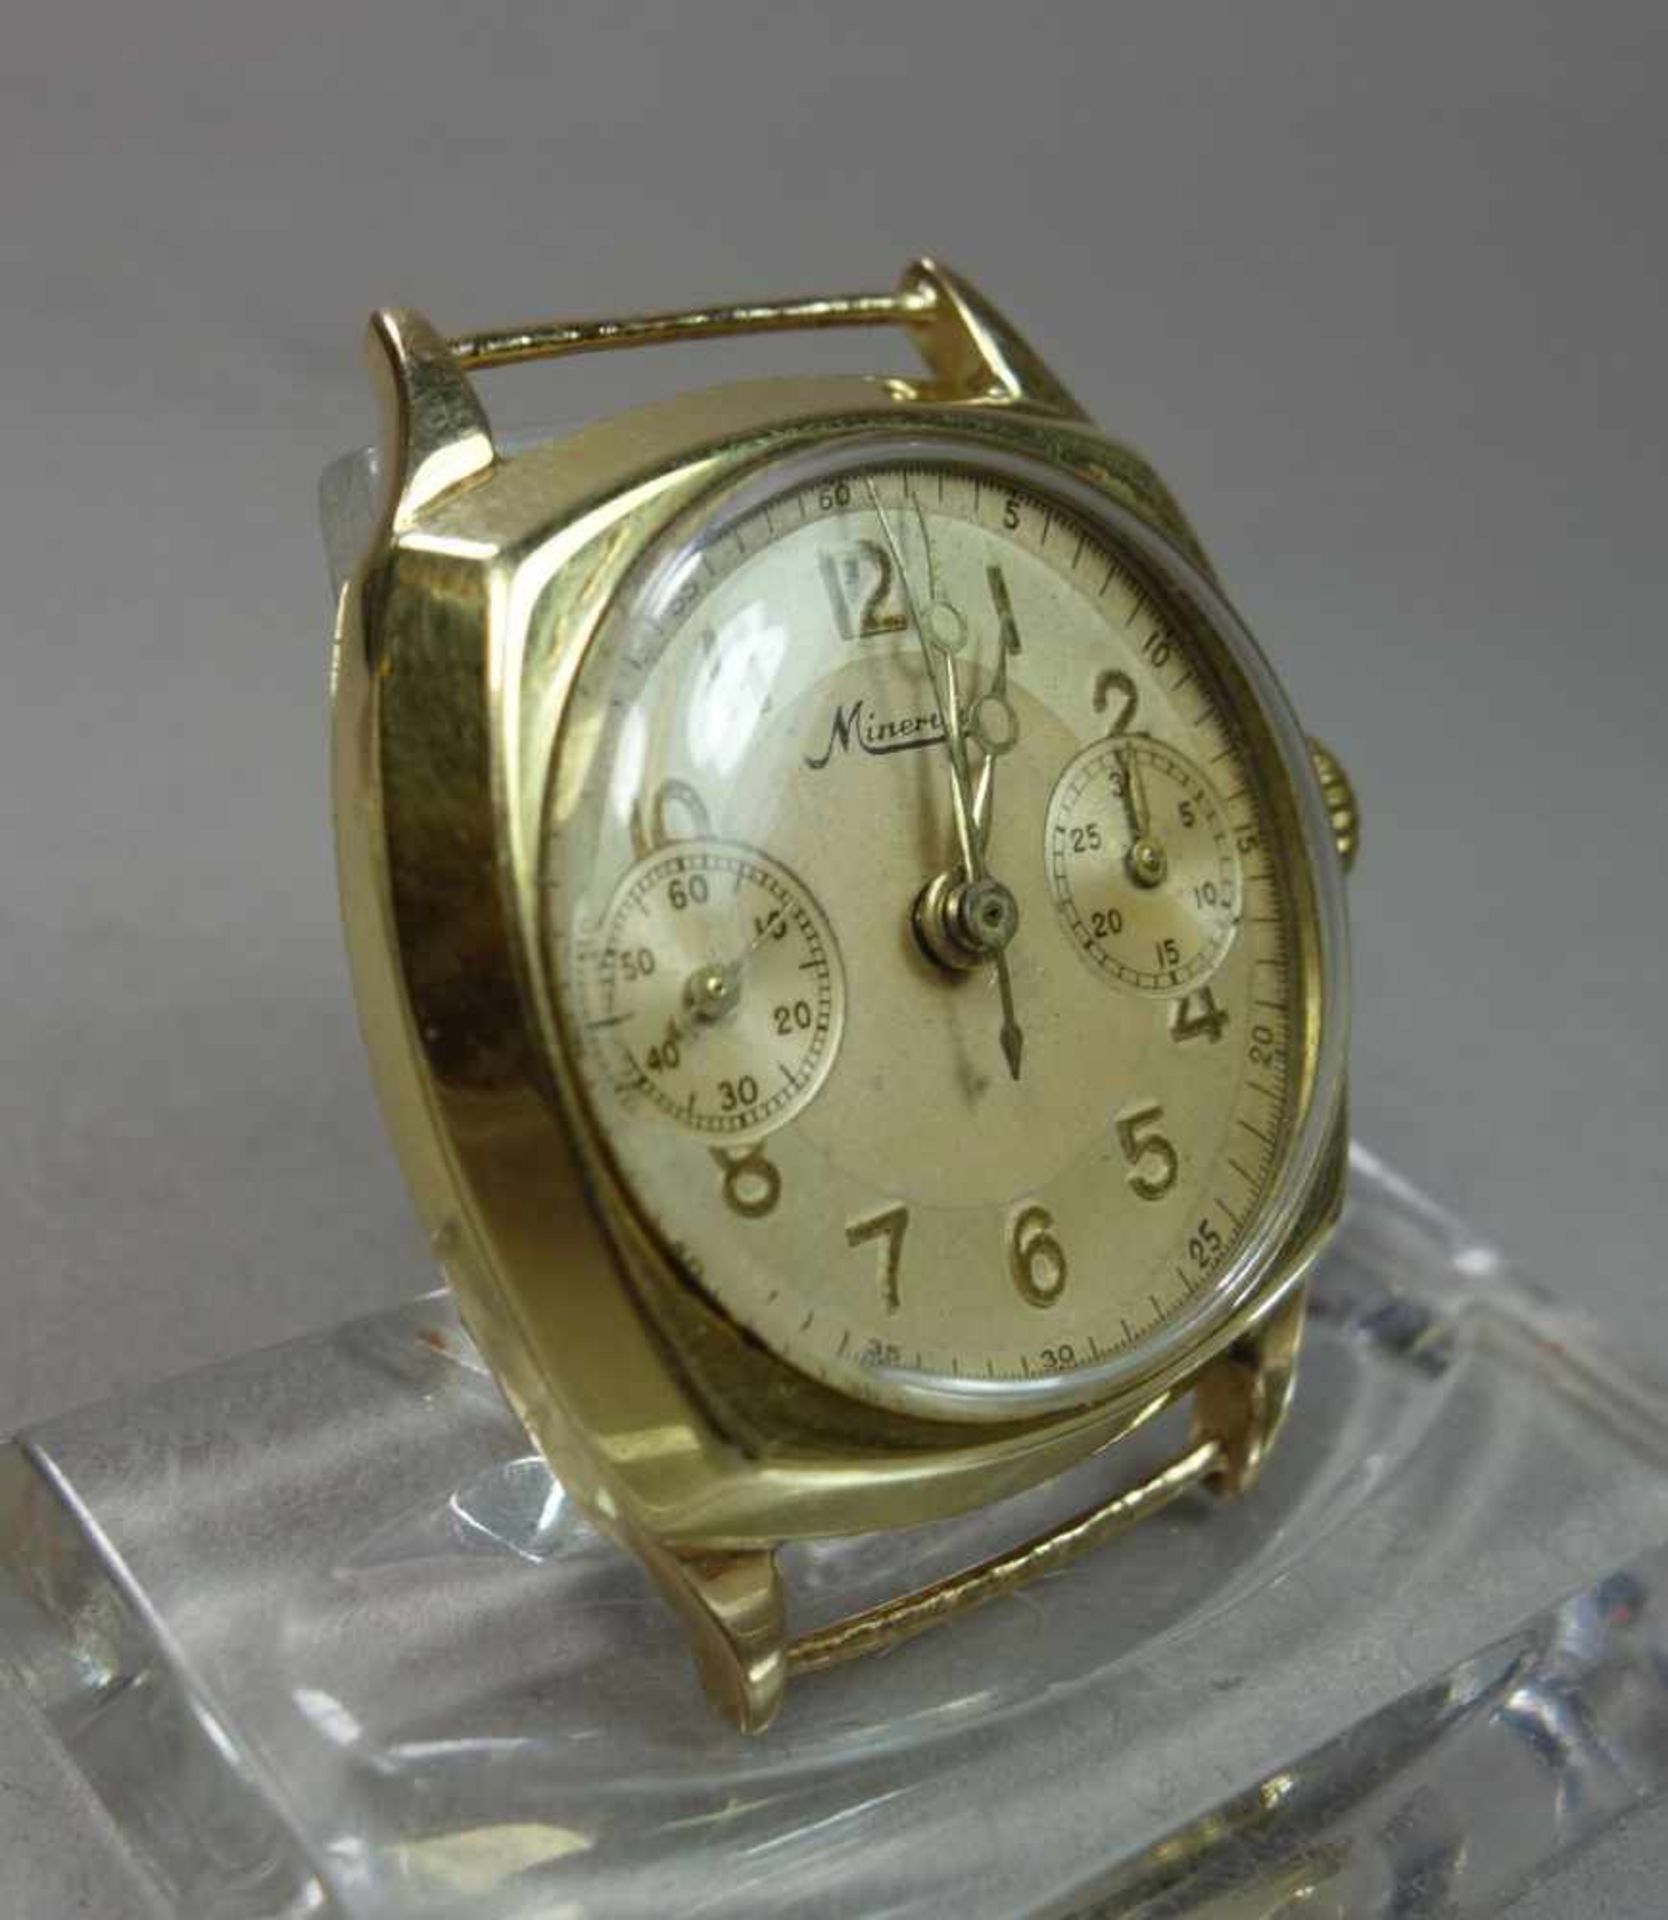 VINTAGE ARMBANDUHR / CHRONOGRAPH: Minerva / vintage wristwatch, wohl 1930er Jahre, Manufaktur - Bild 2 aus 7